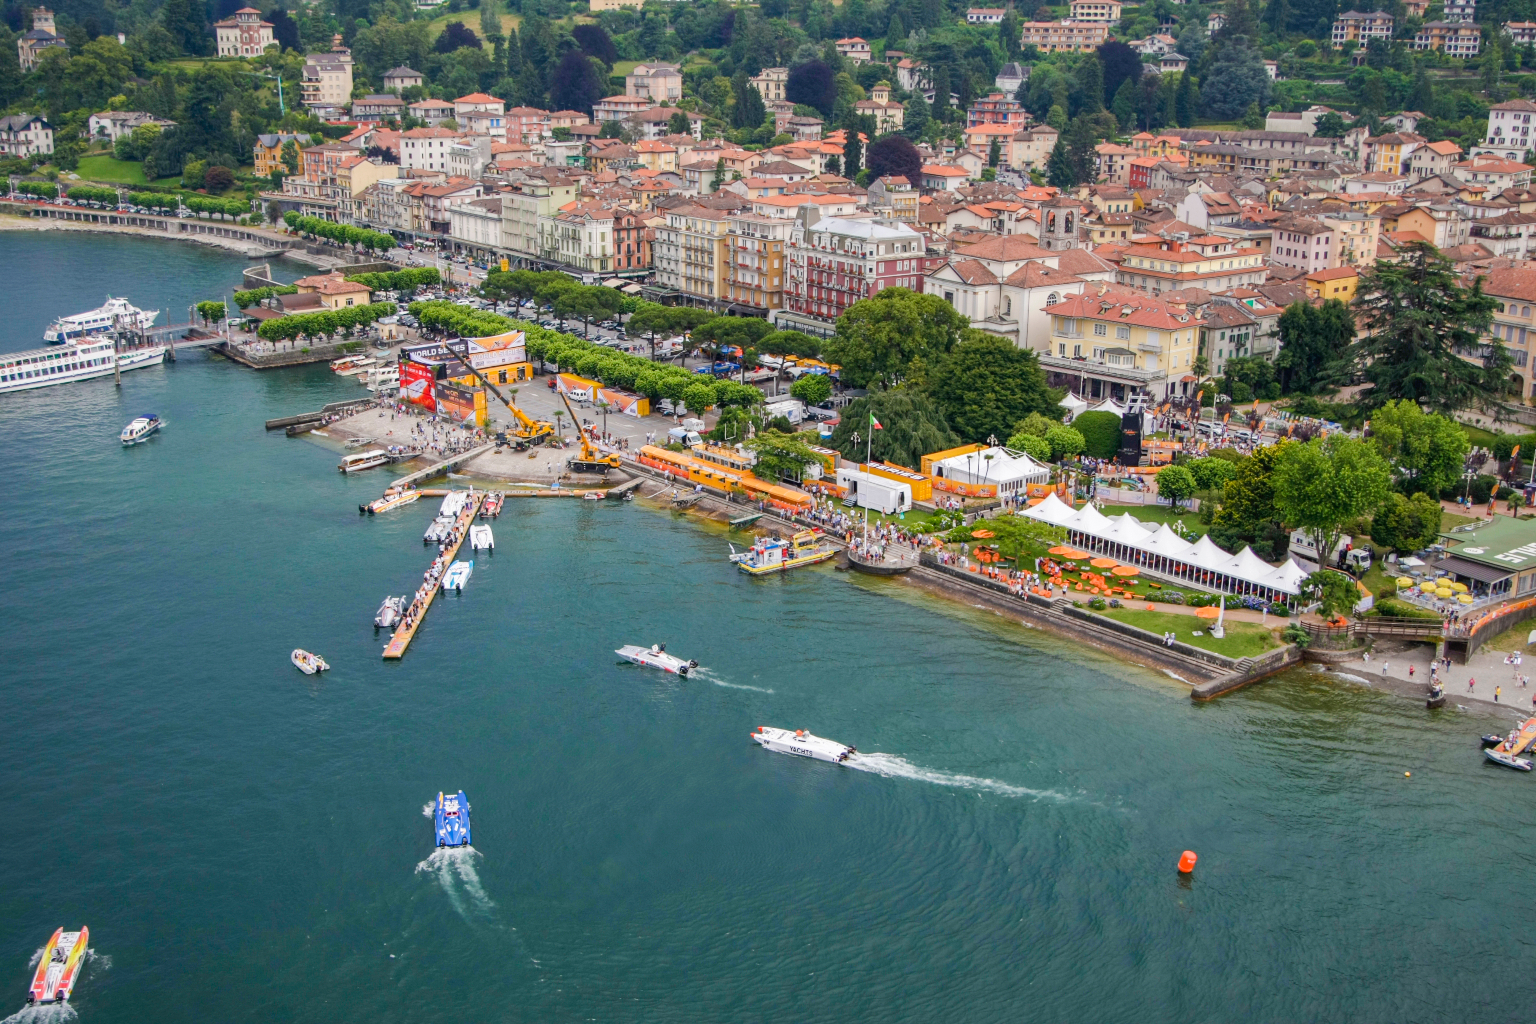 2014 UIM Skydive XCAT World Series Stresa Grand Prix 20th to 22nd June 2014